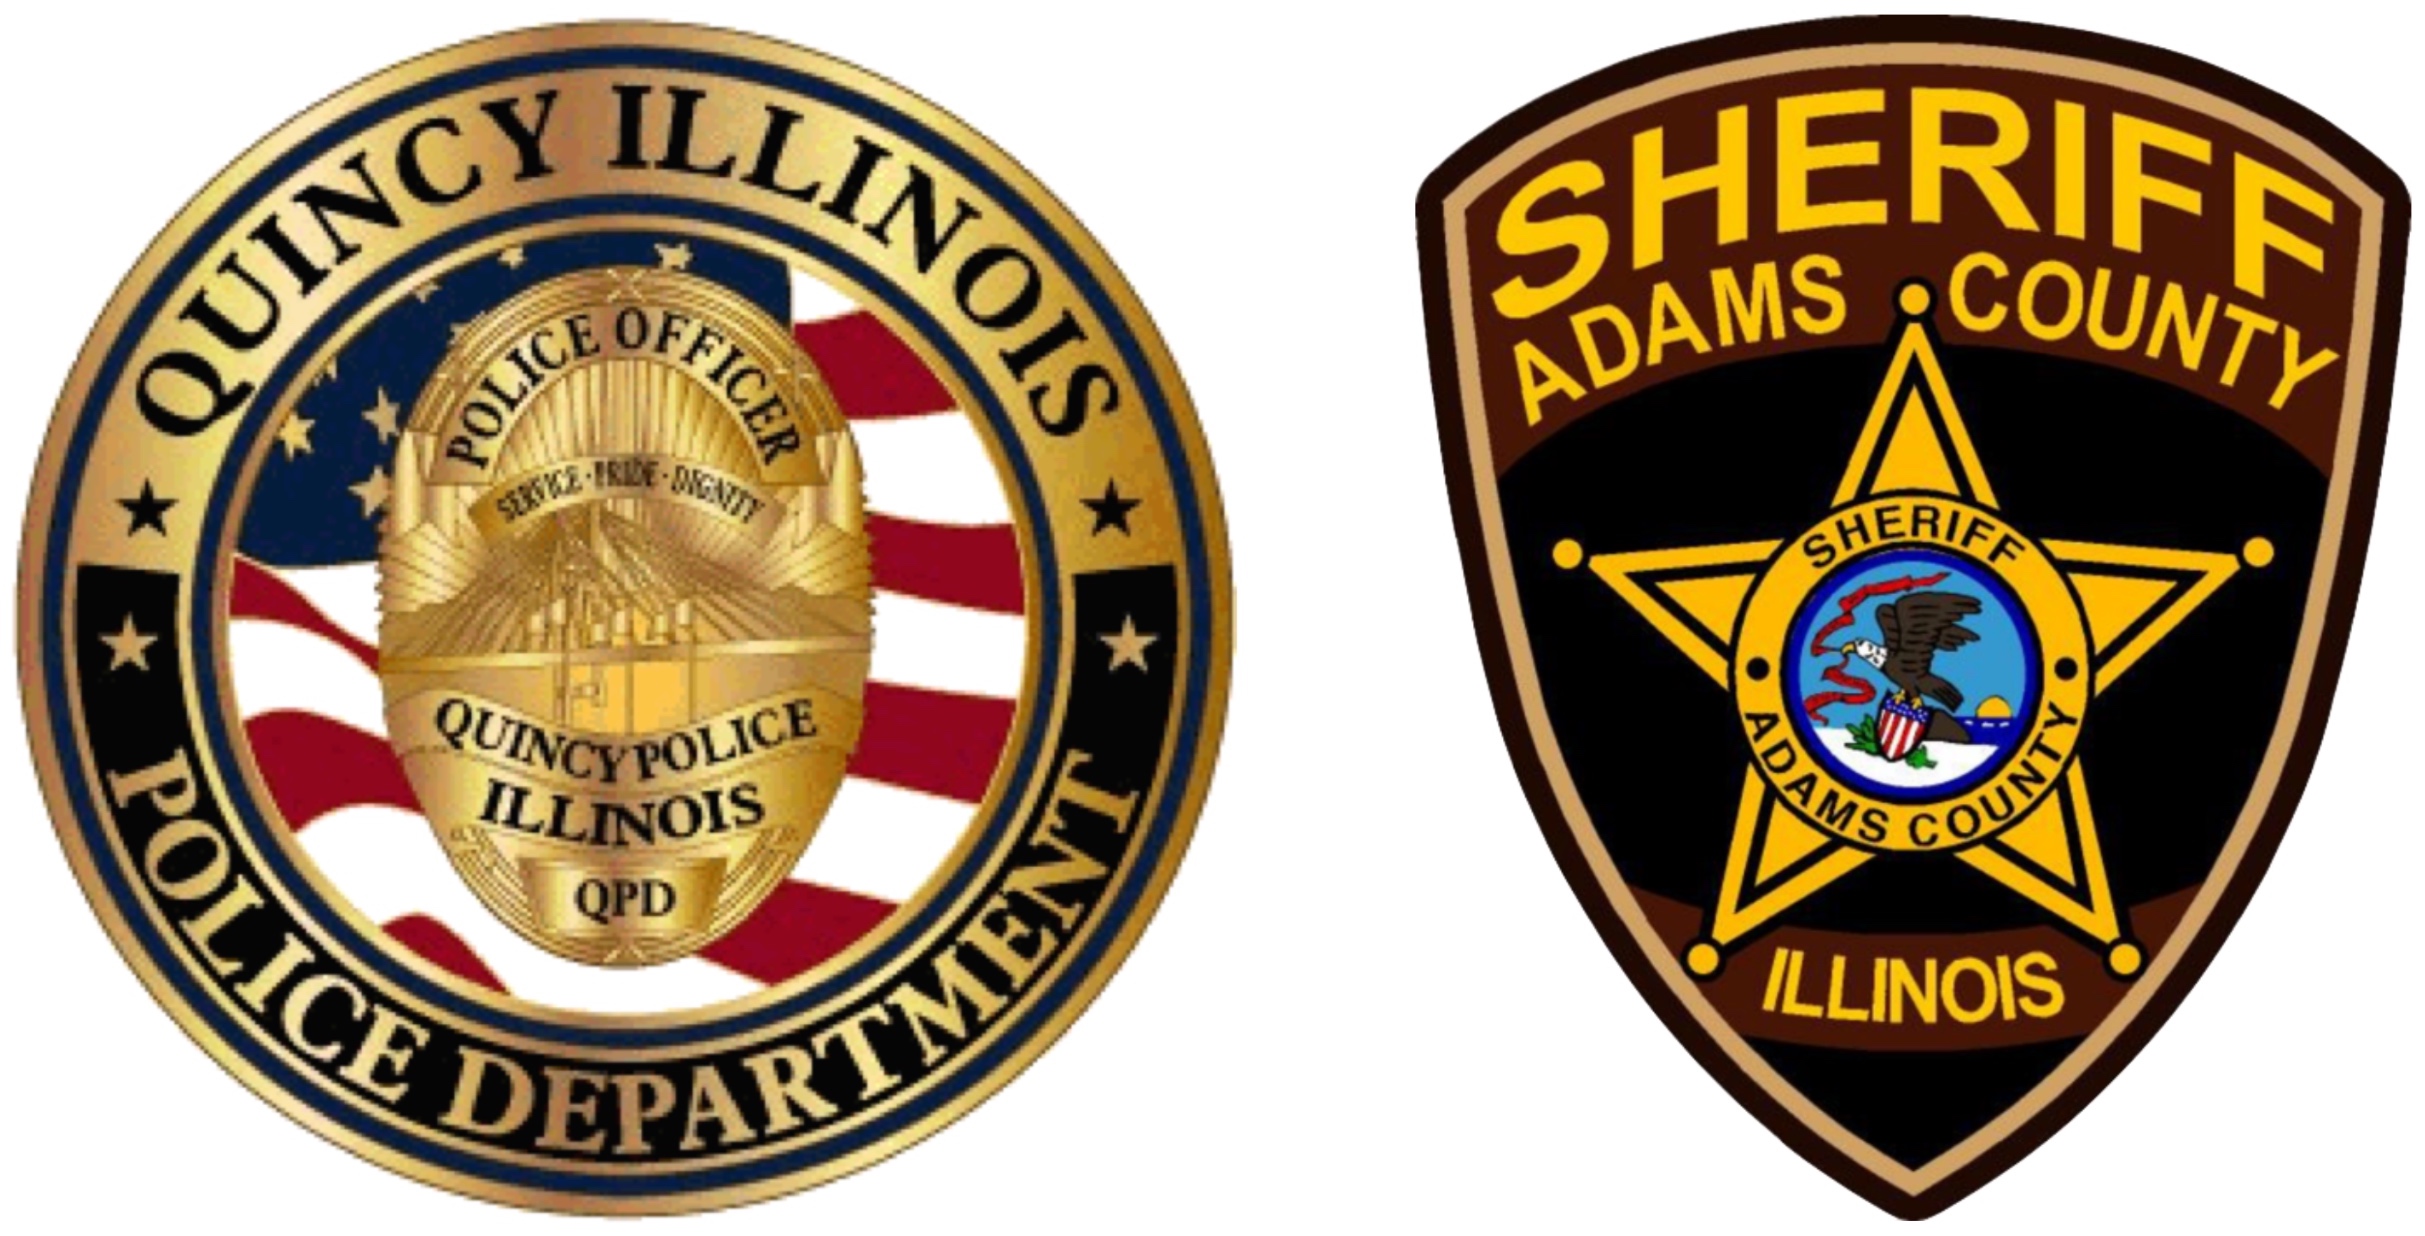 Police Department Sheriff's Department logos